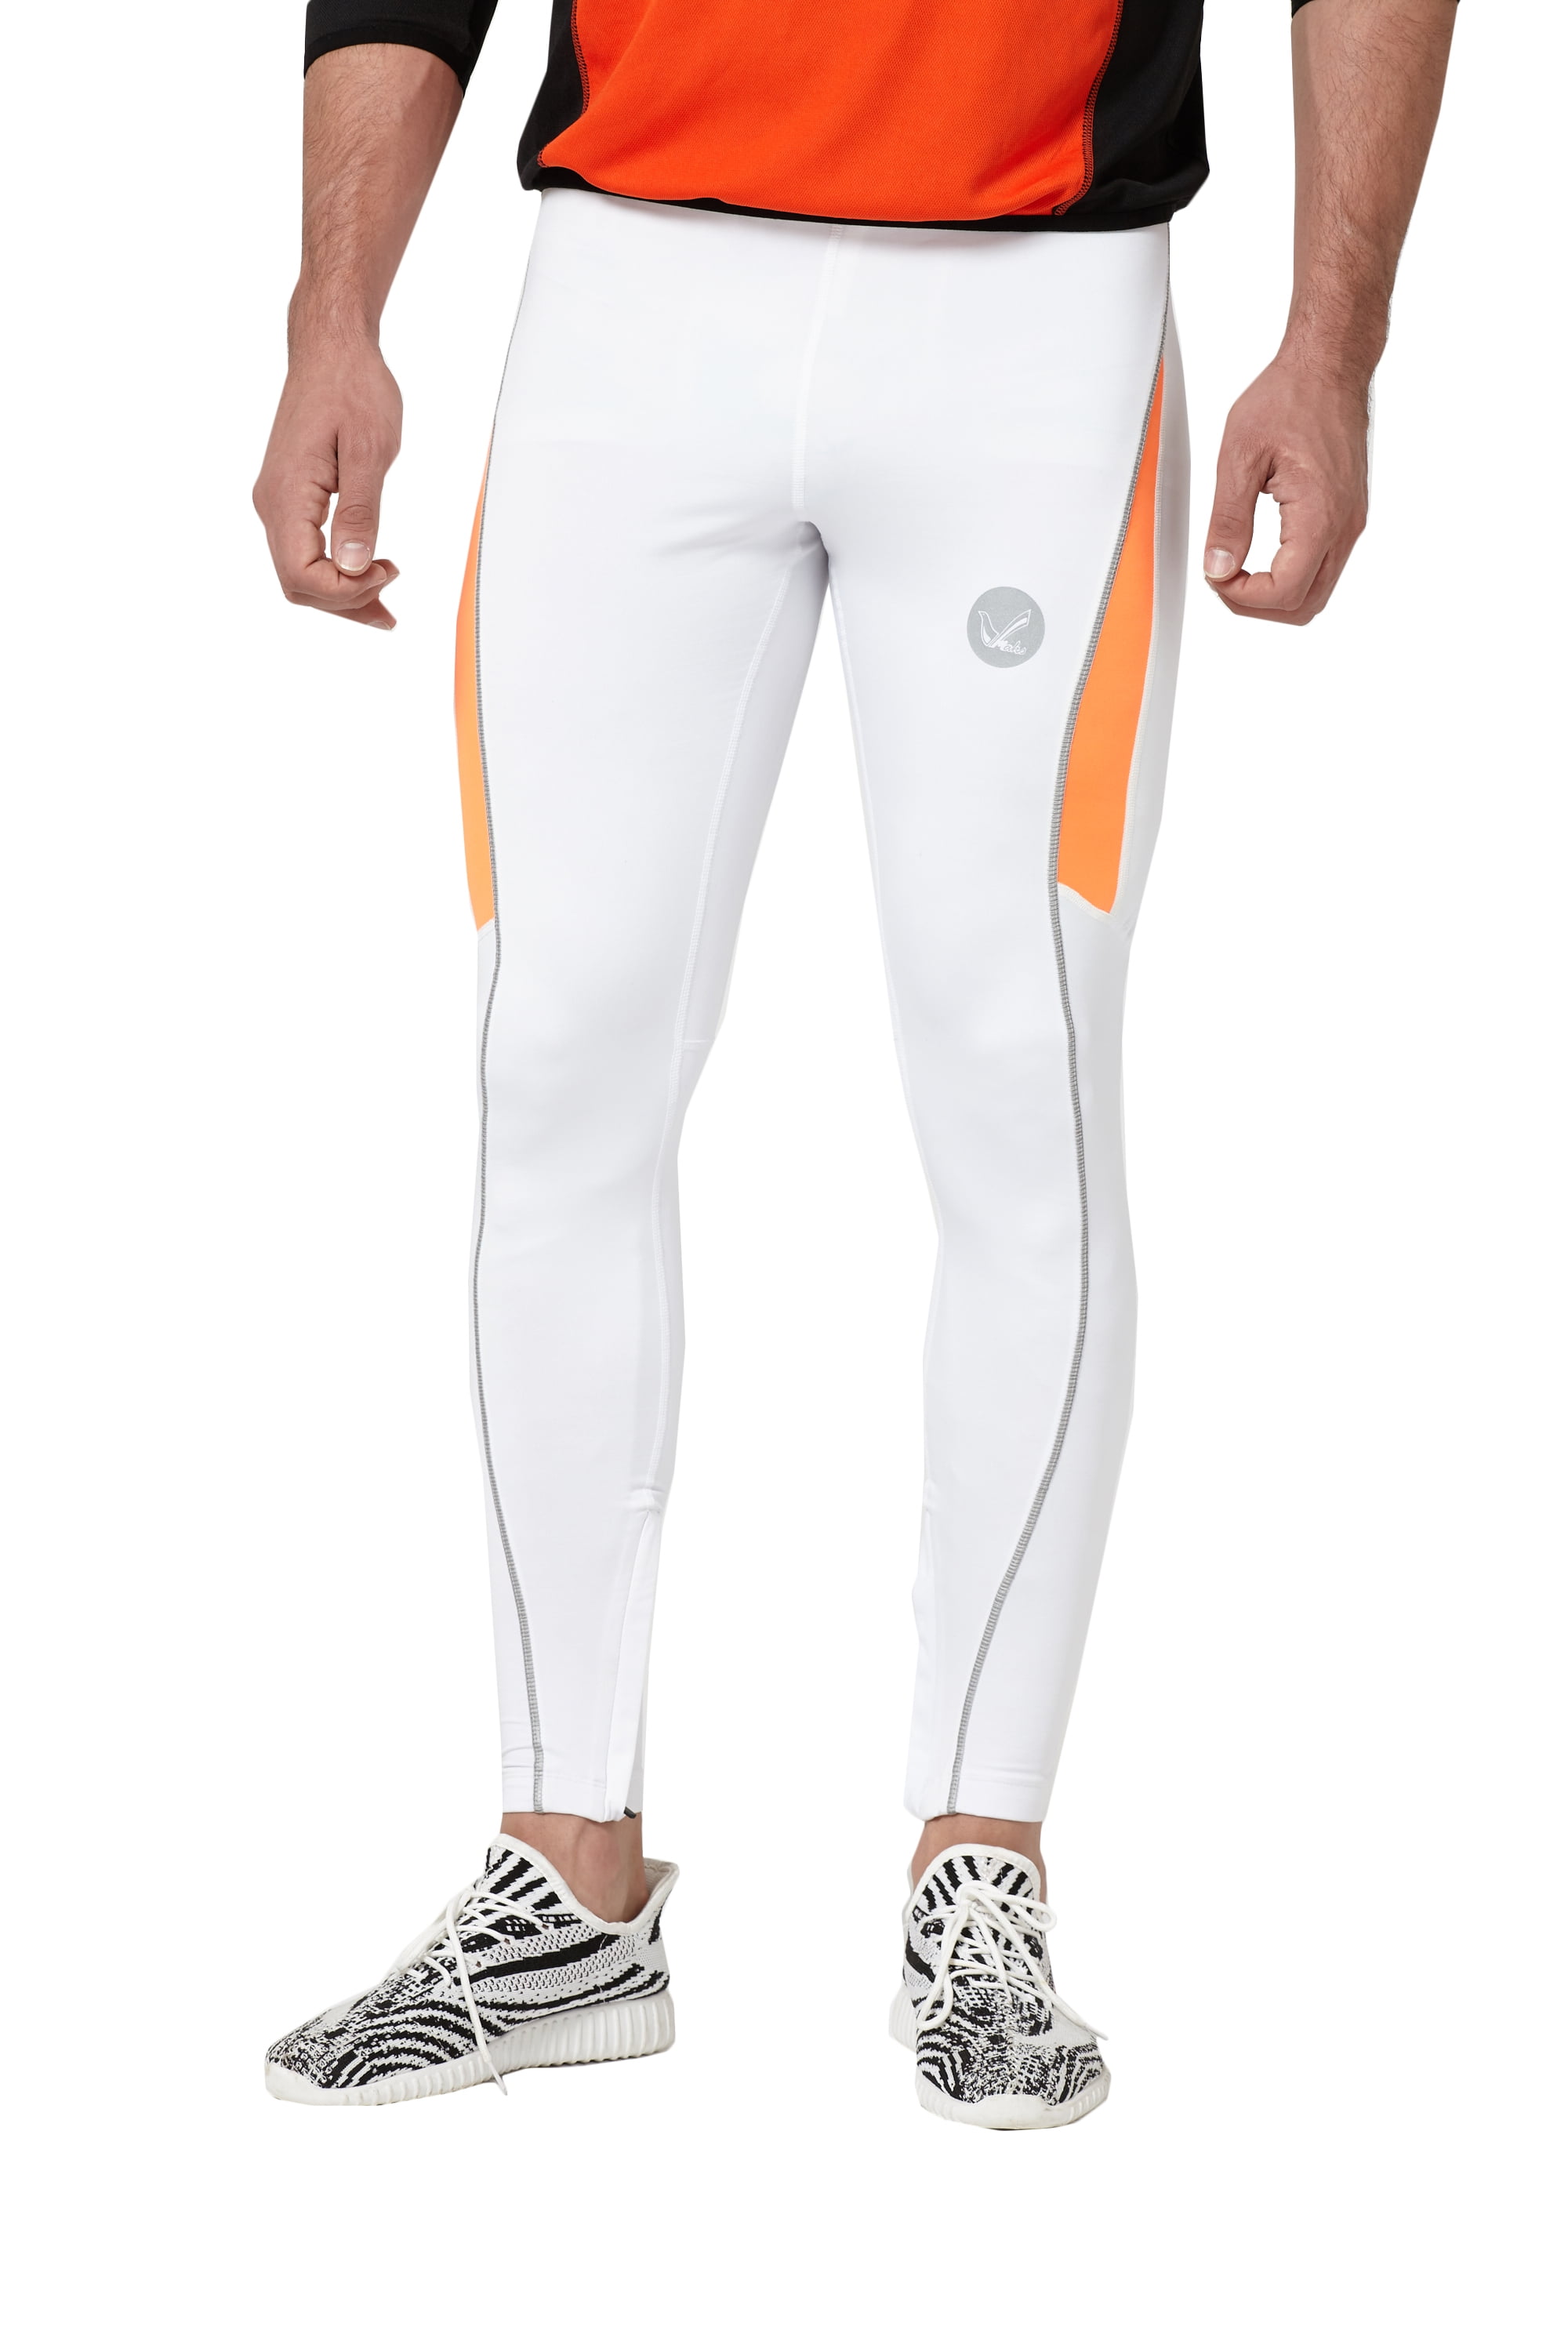 FashionOutfit Men's Casual Side Panel Long Drawstring Ankle Zipper Track  Pants | eBay